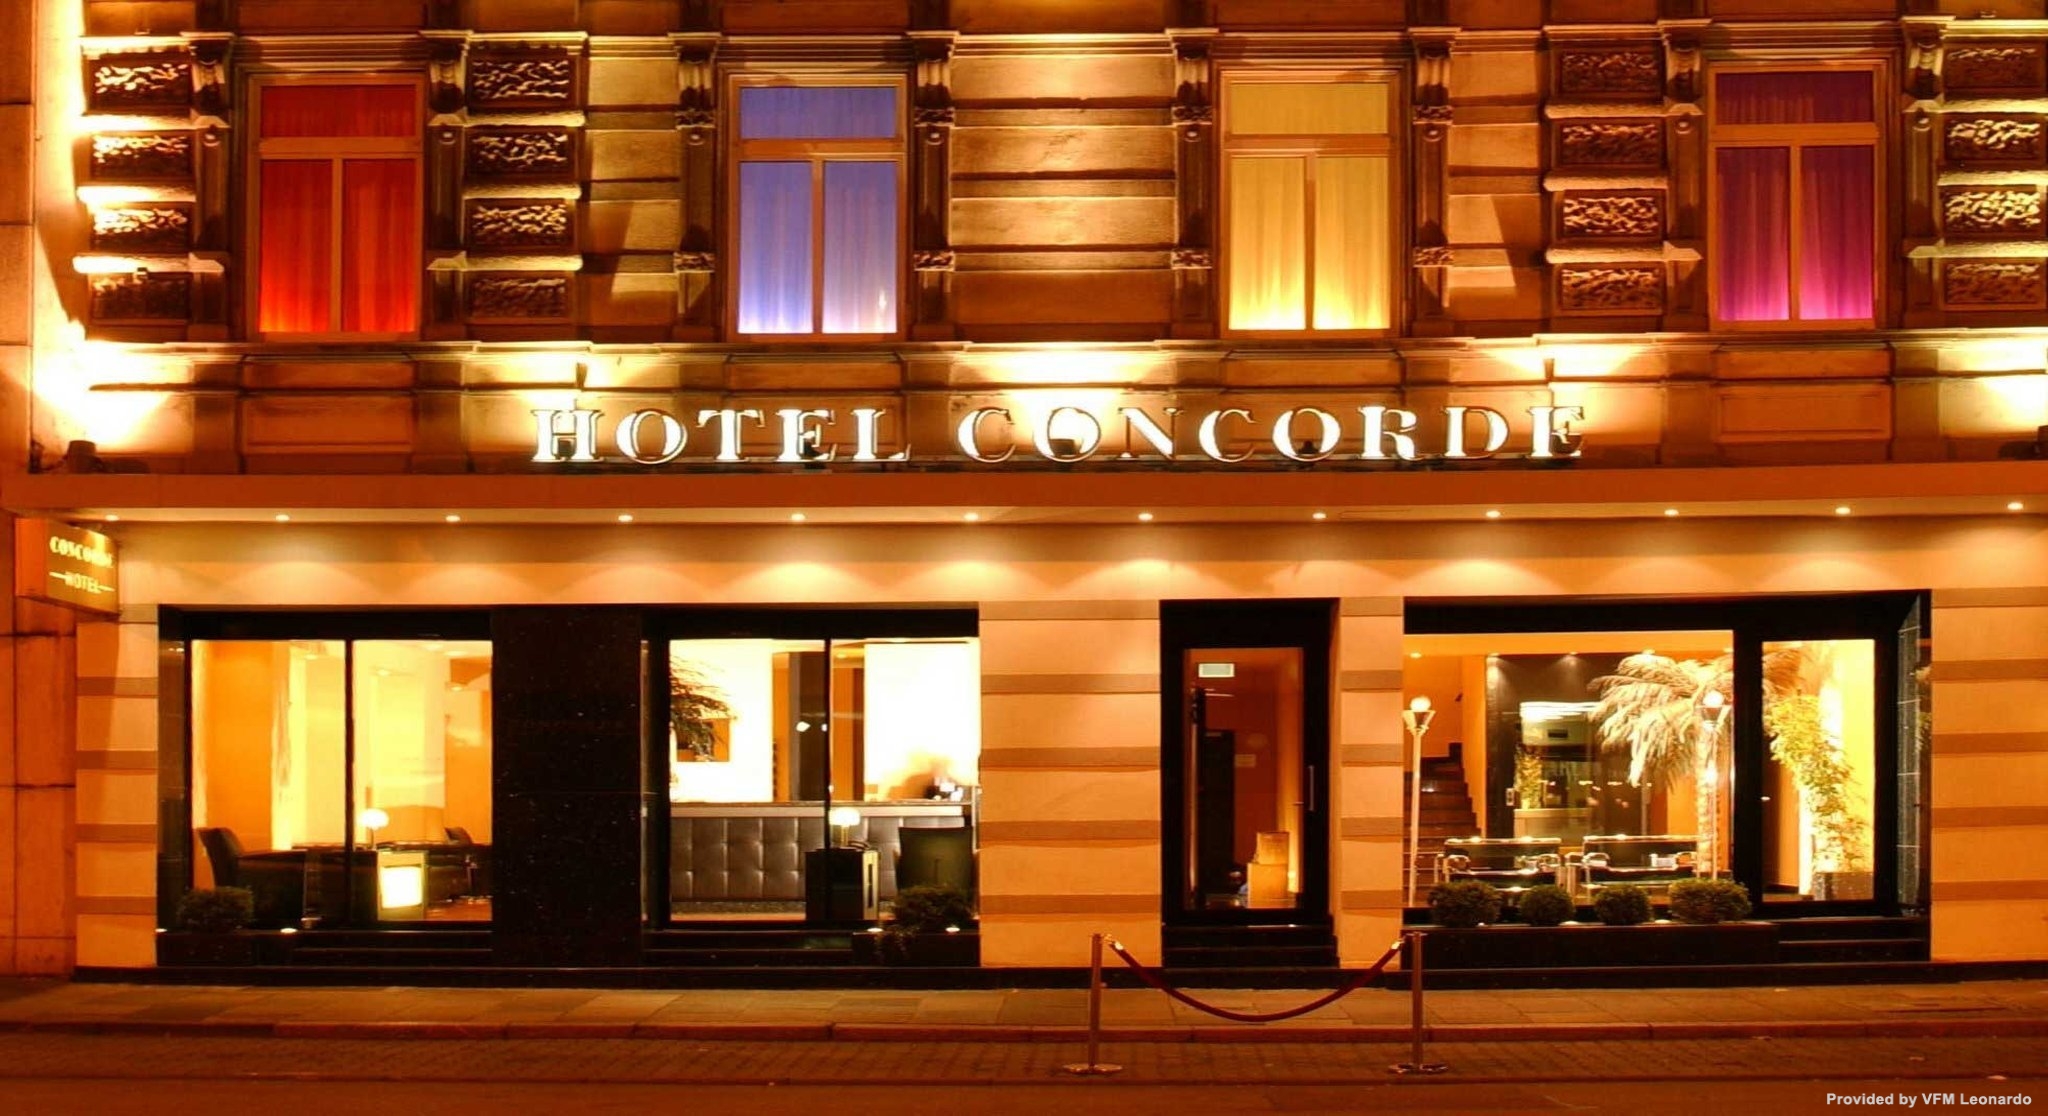 Hotel Concorde (Frankfurt am Main)